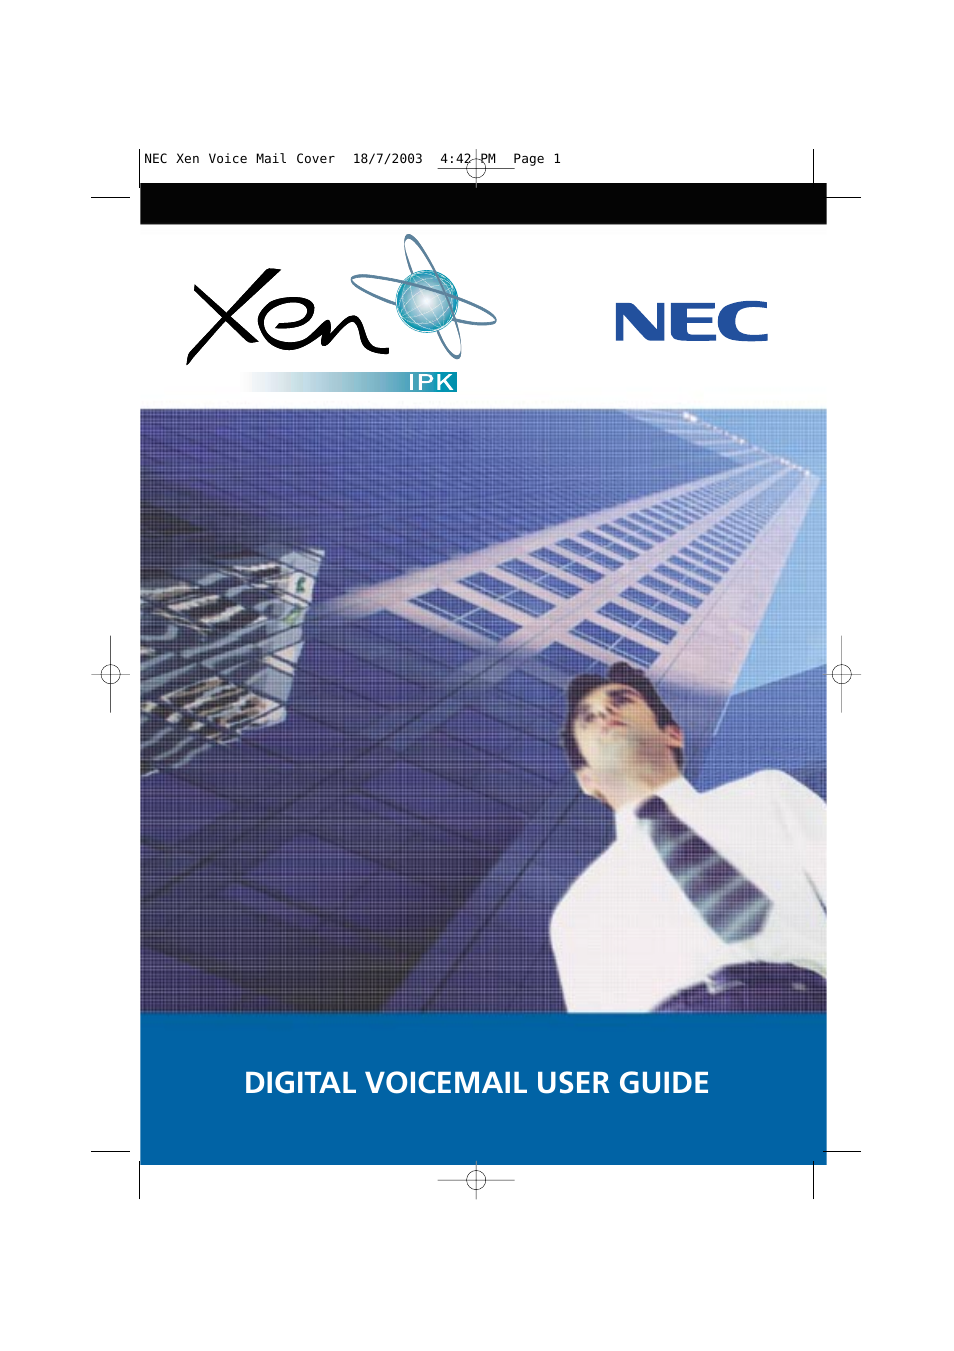 Xen Digital Voicemail